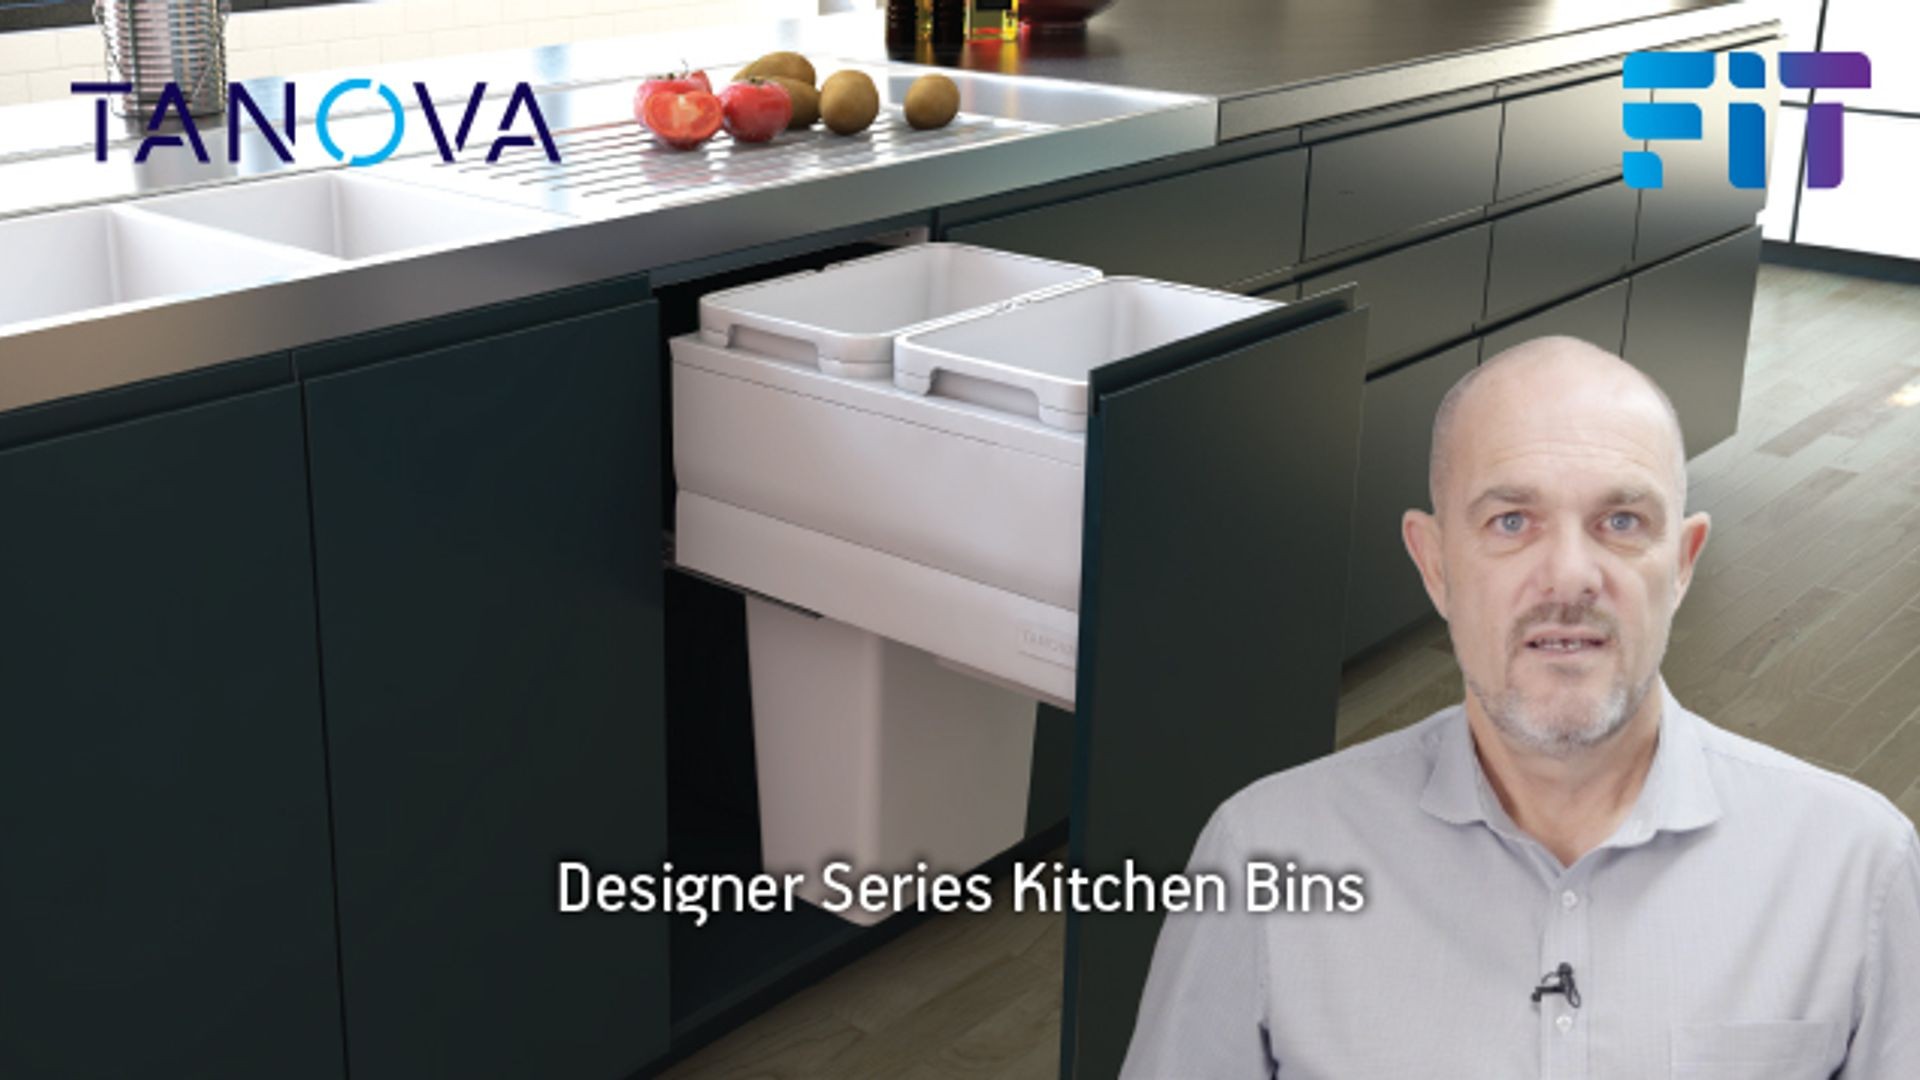 Tanova Designer Series Pull Out Kitchen Bins gallery detail image